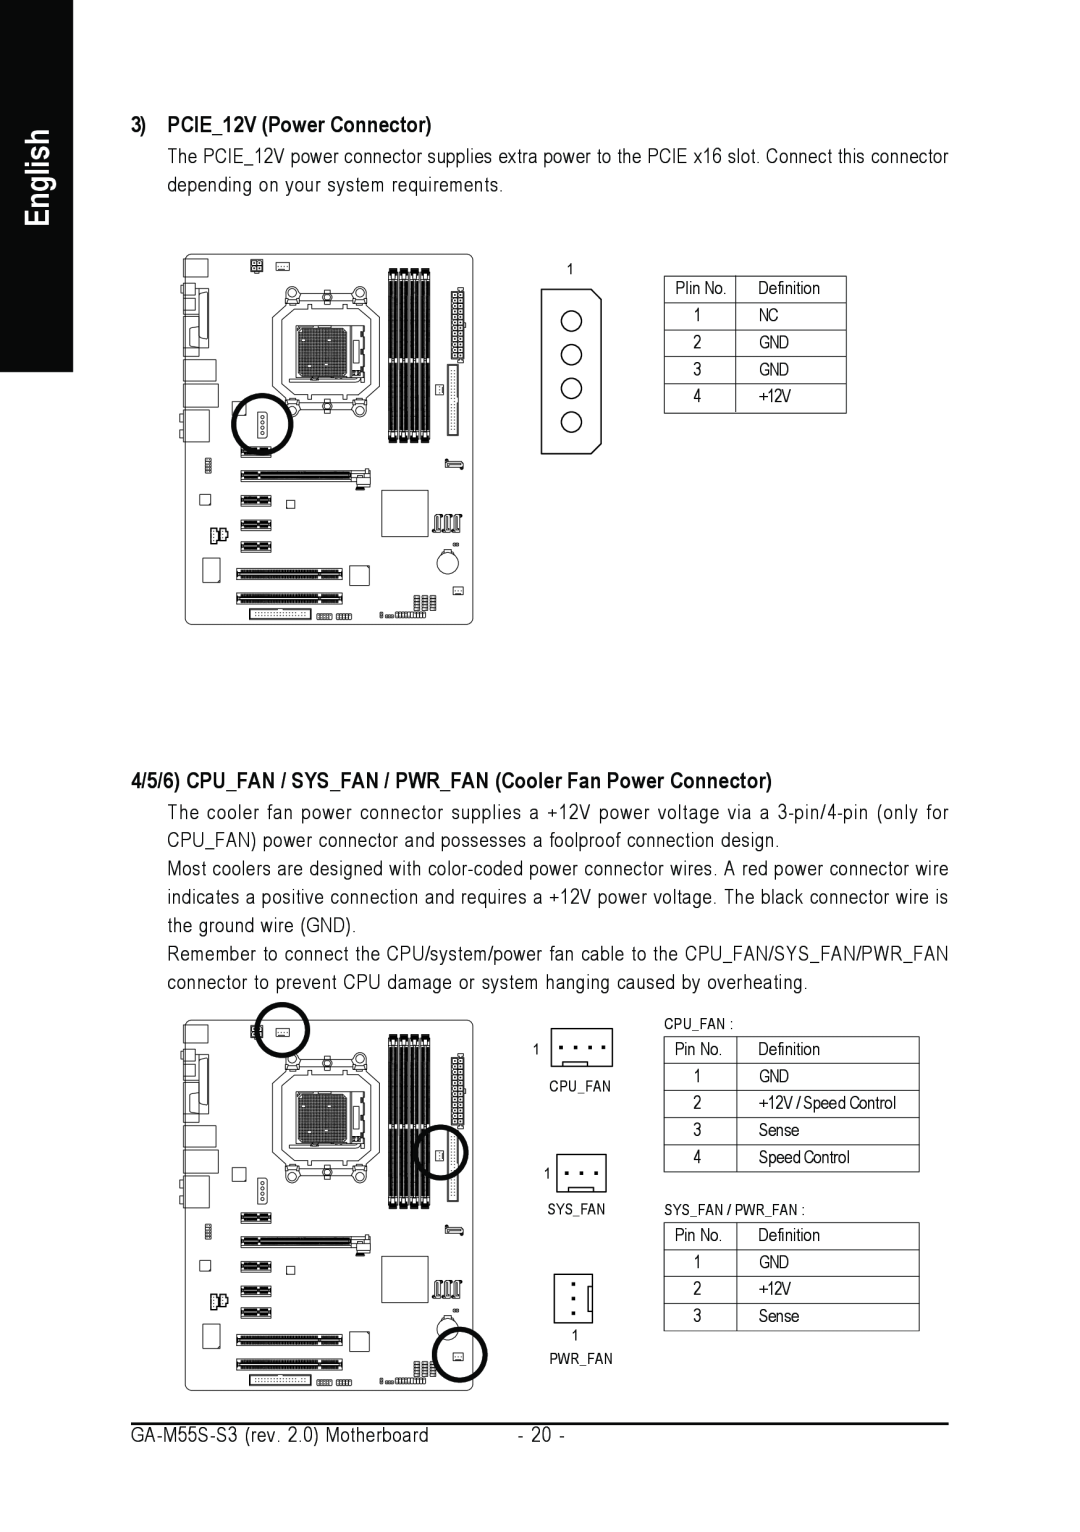 Gigabyte GA-M55S-S3 PCIE12V Power Connector, 4/5/6 CPUFAN / SYSFAN / PWRFAN Cooler Fan Power Connector, English, Cpufan 